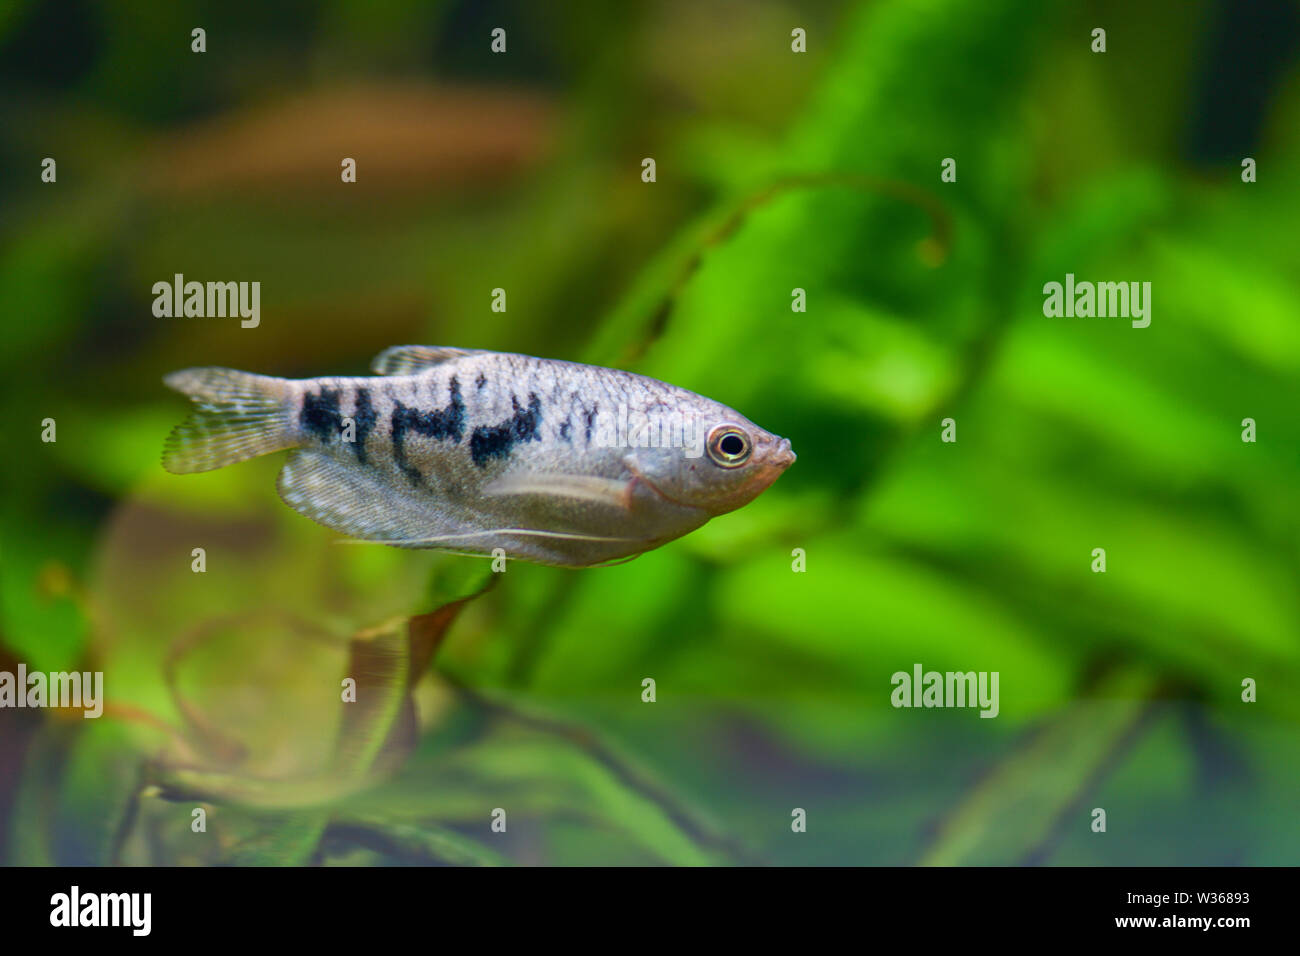 Trichogaster. Gurami fish. A blue fish gurami swims in a clear pond among green algae plants Stock Photo